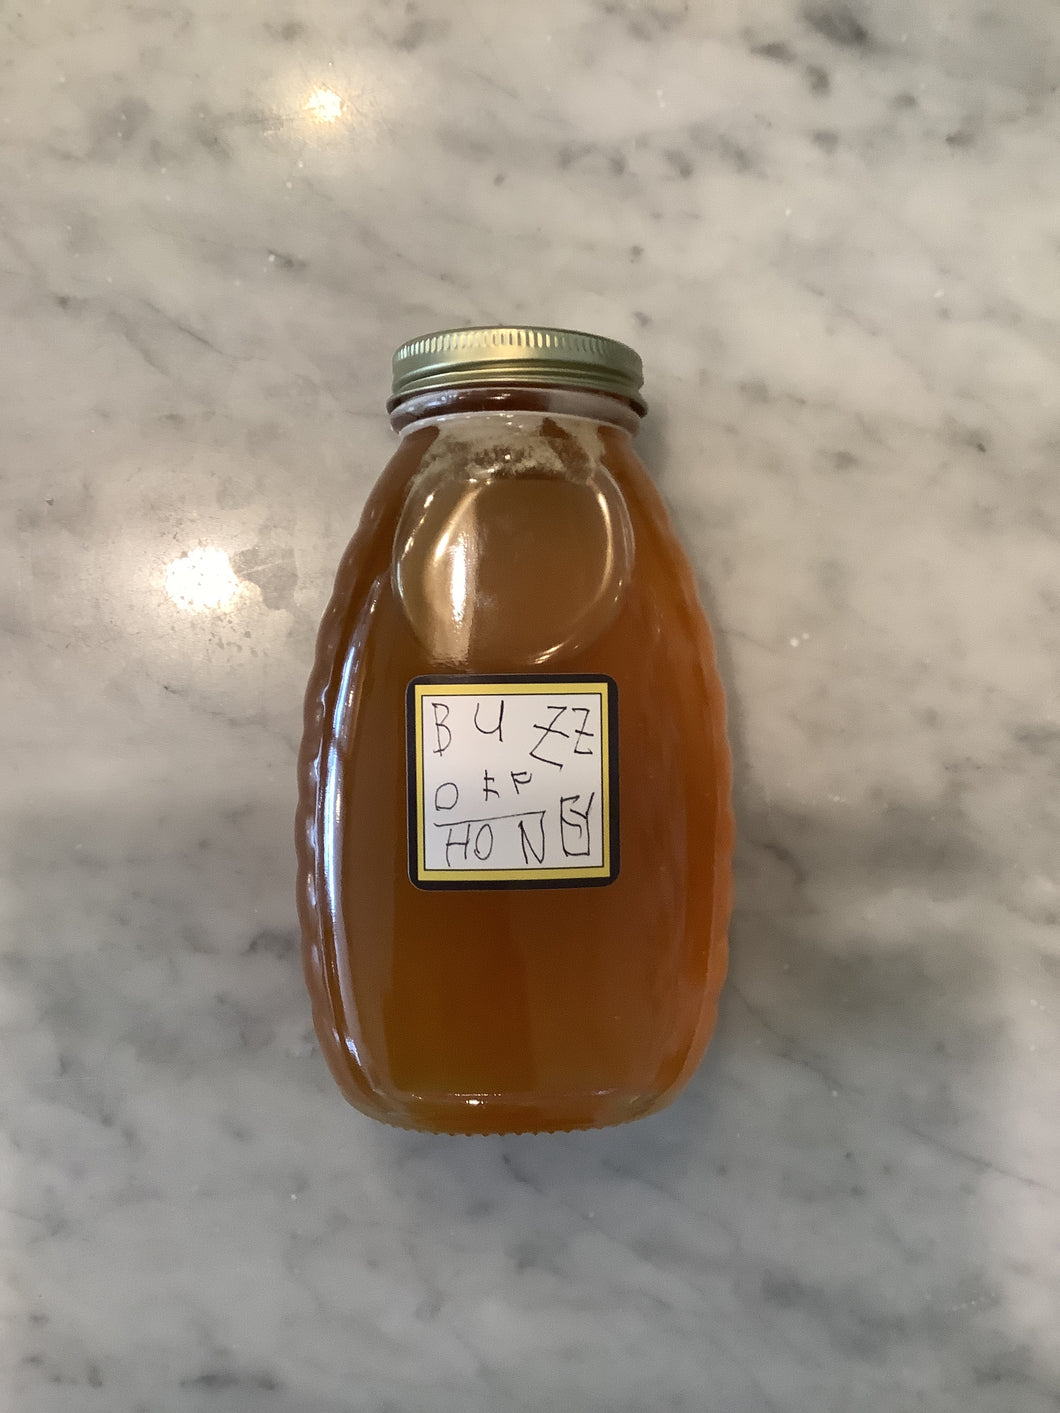 Buzz Off Honey